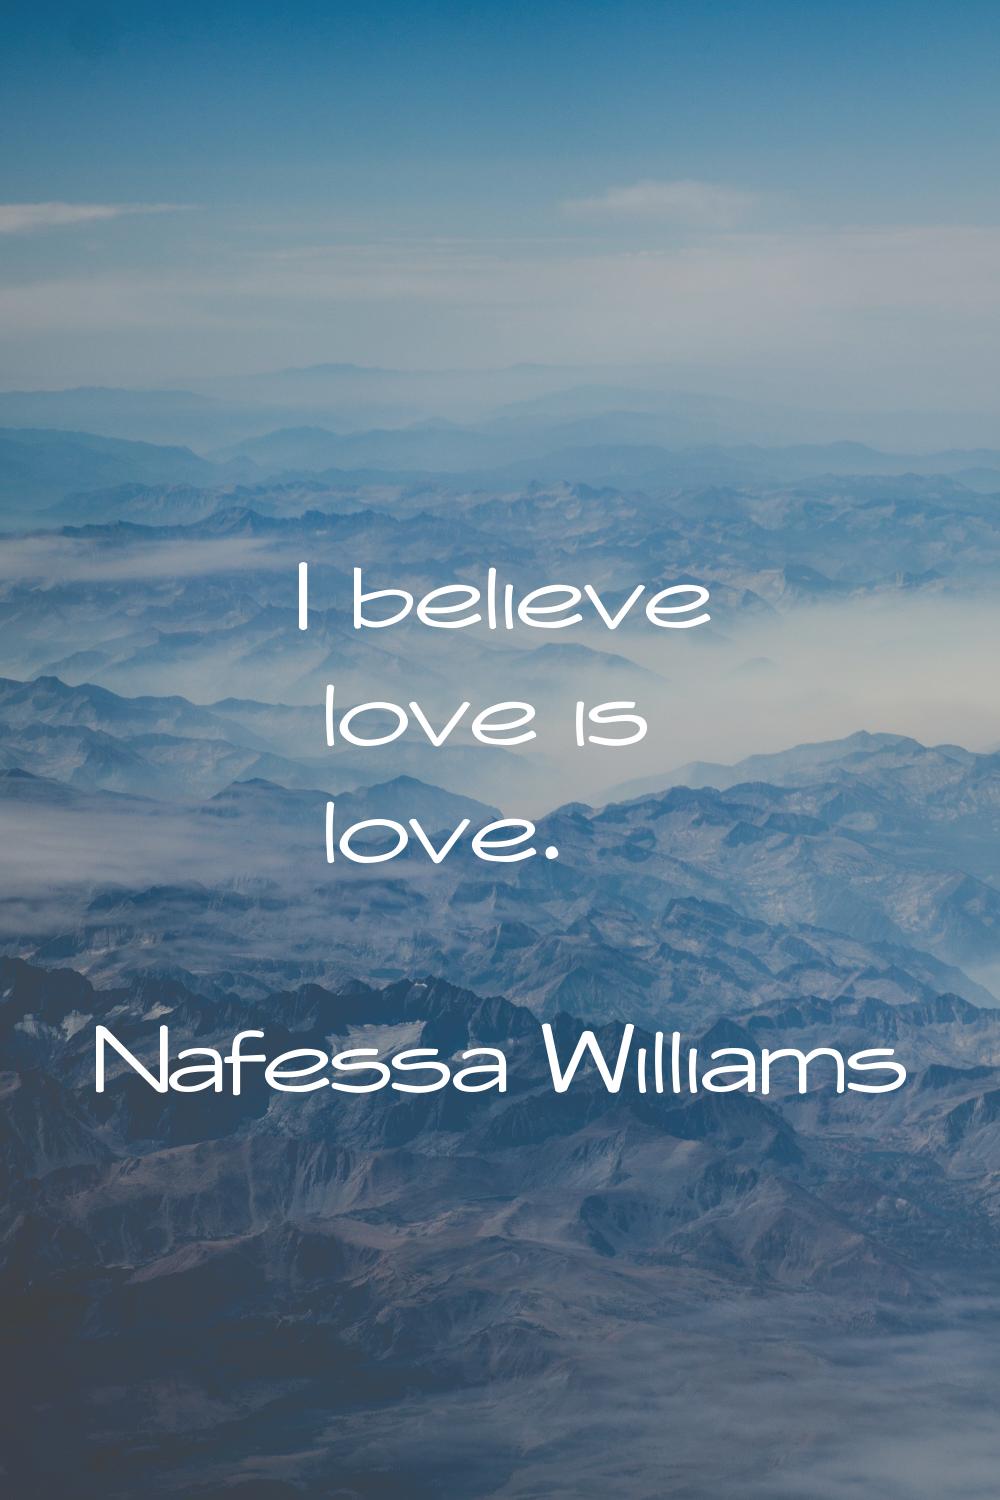 I believe love is love.